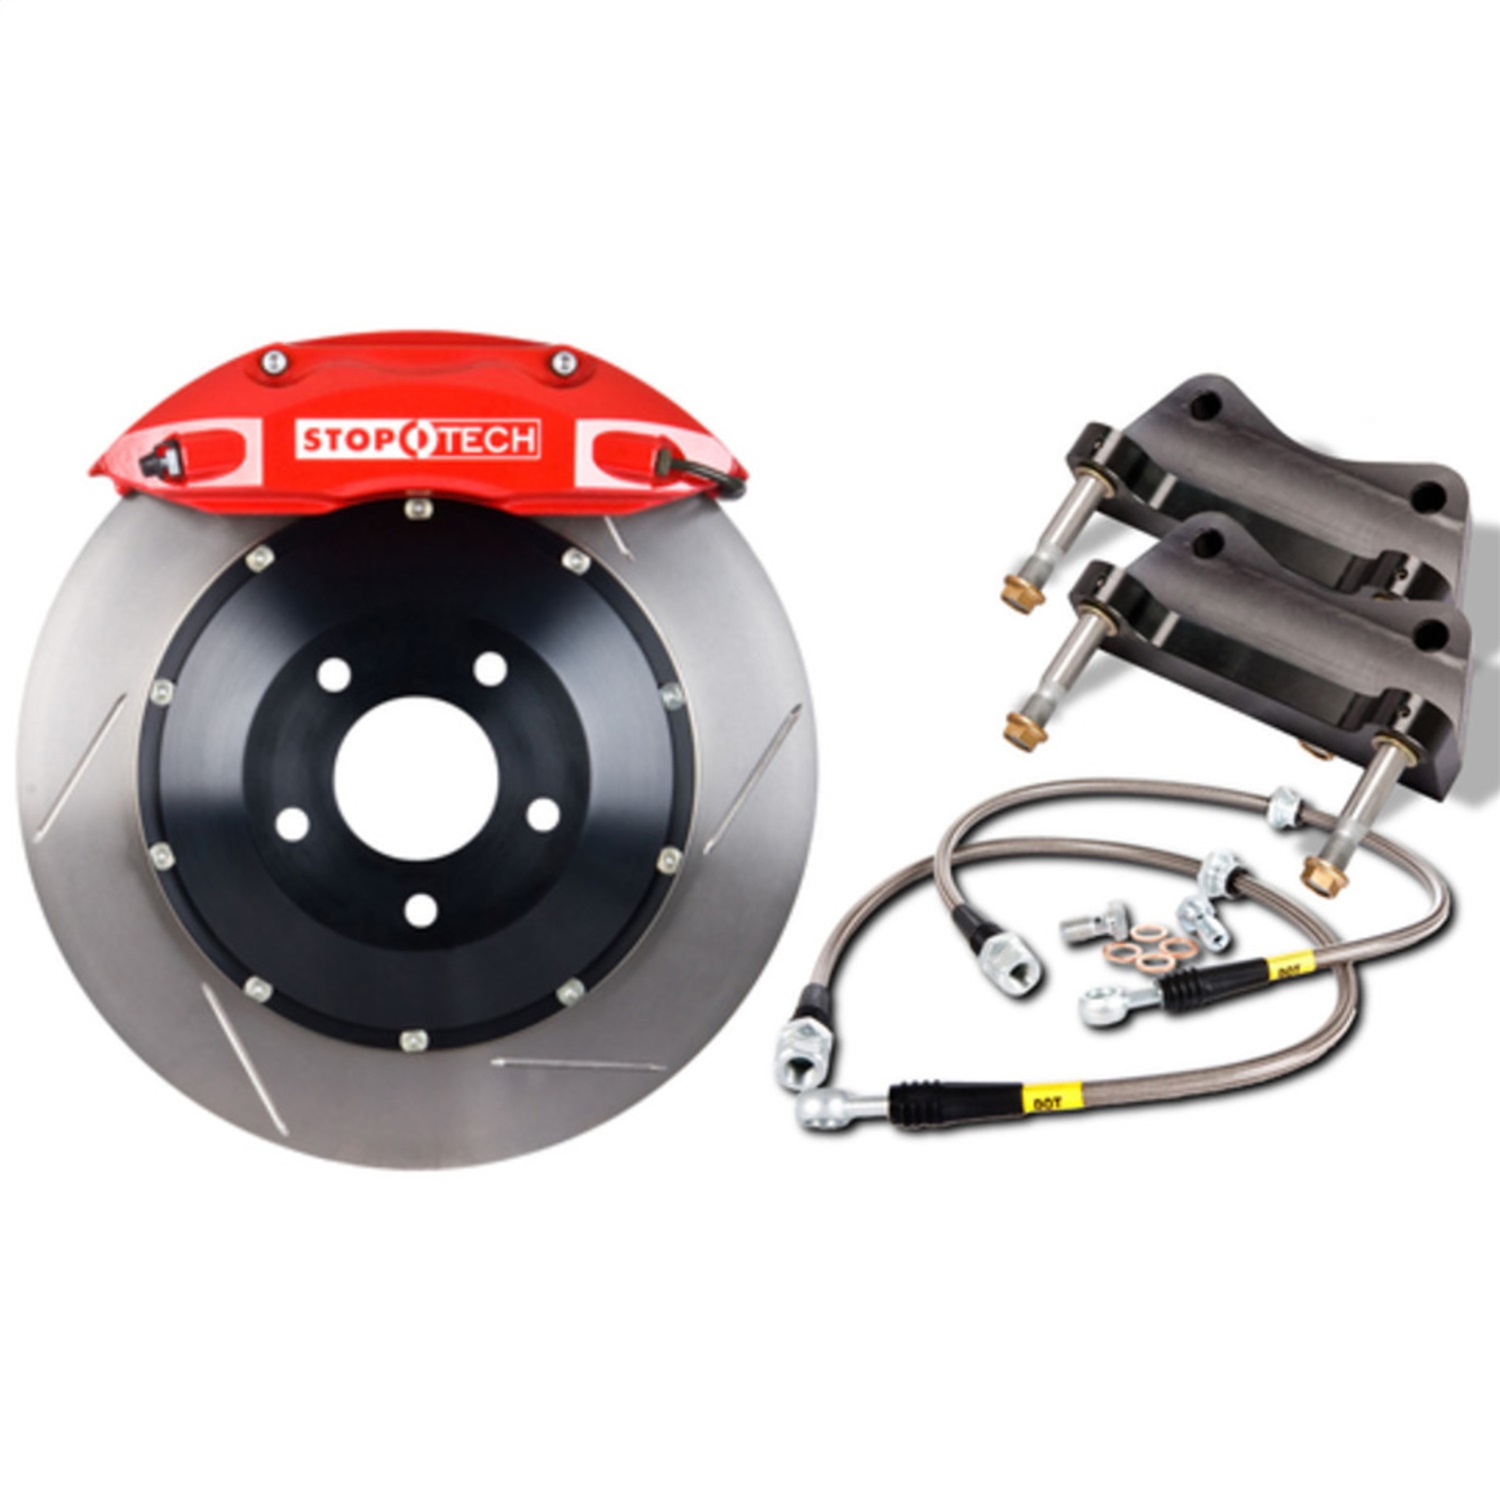 StopTech 83.842.002G.71 Big Brake Kit w/2 Piece Rotors Fits Impreza WRX STI